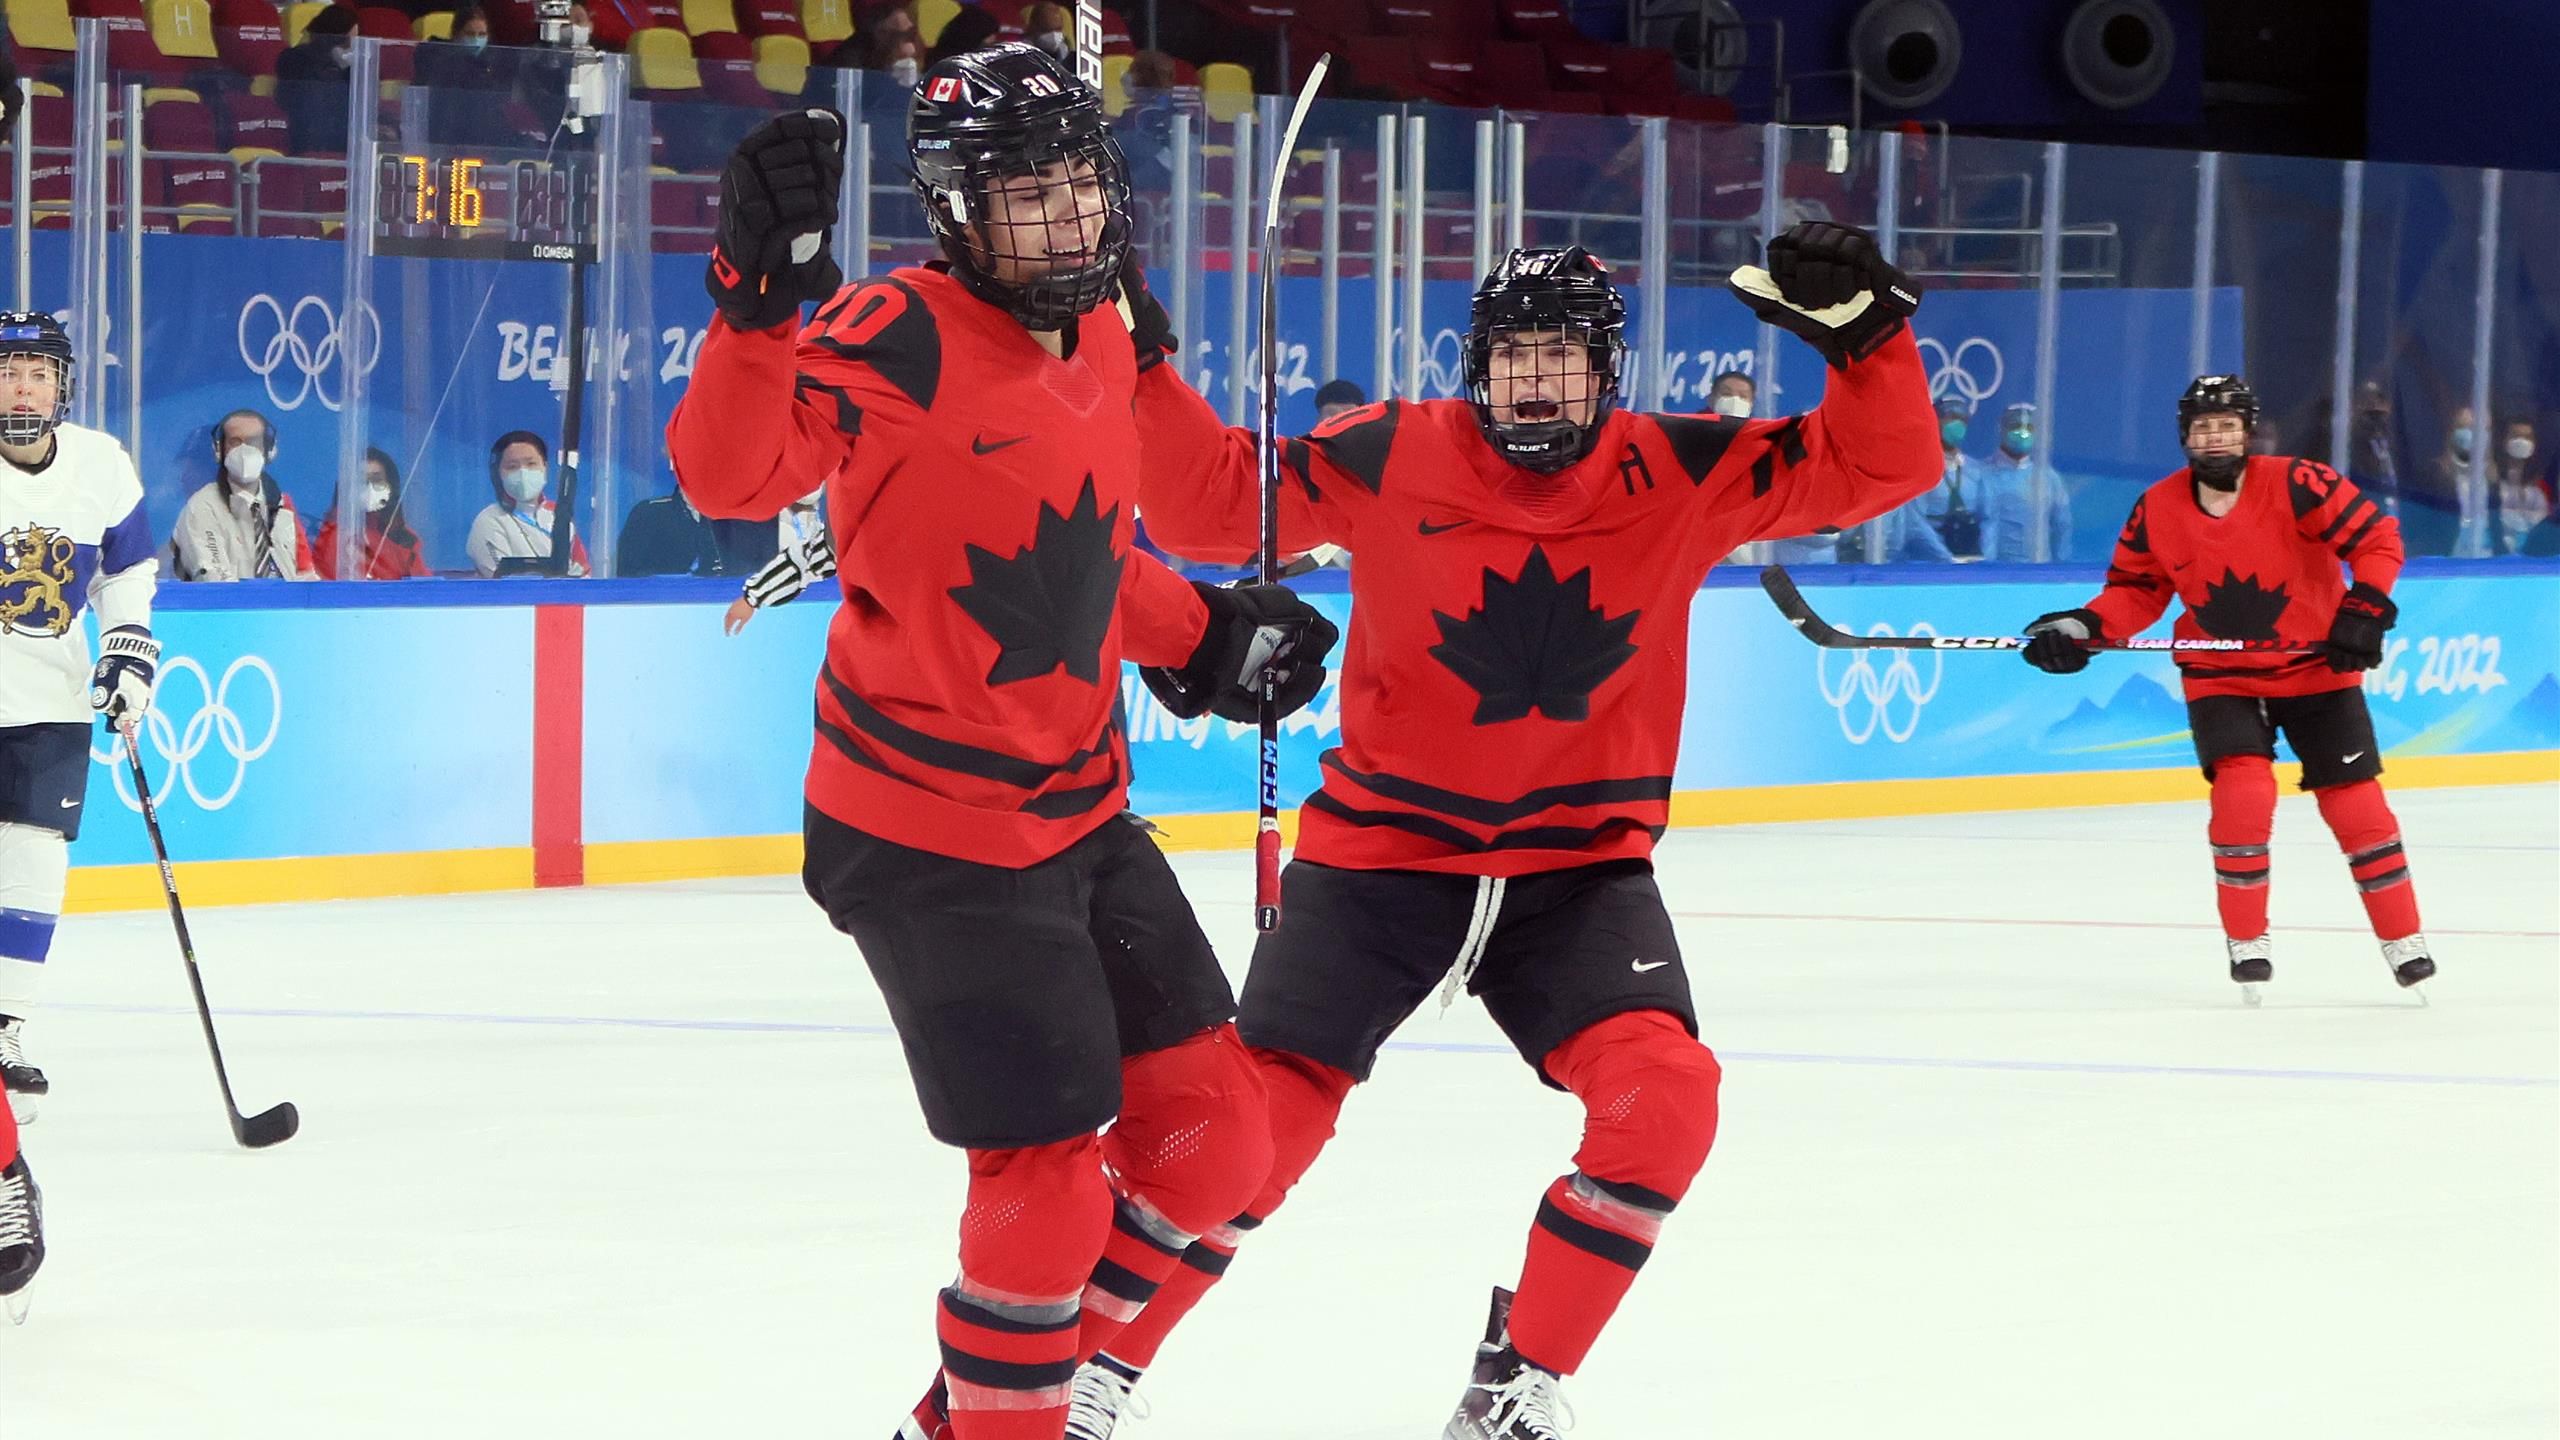 2018 Olympics: U.S. Women's Hockey Team Beats Canada to Win First